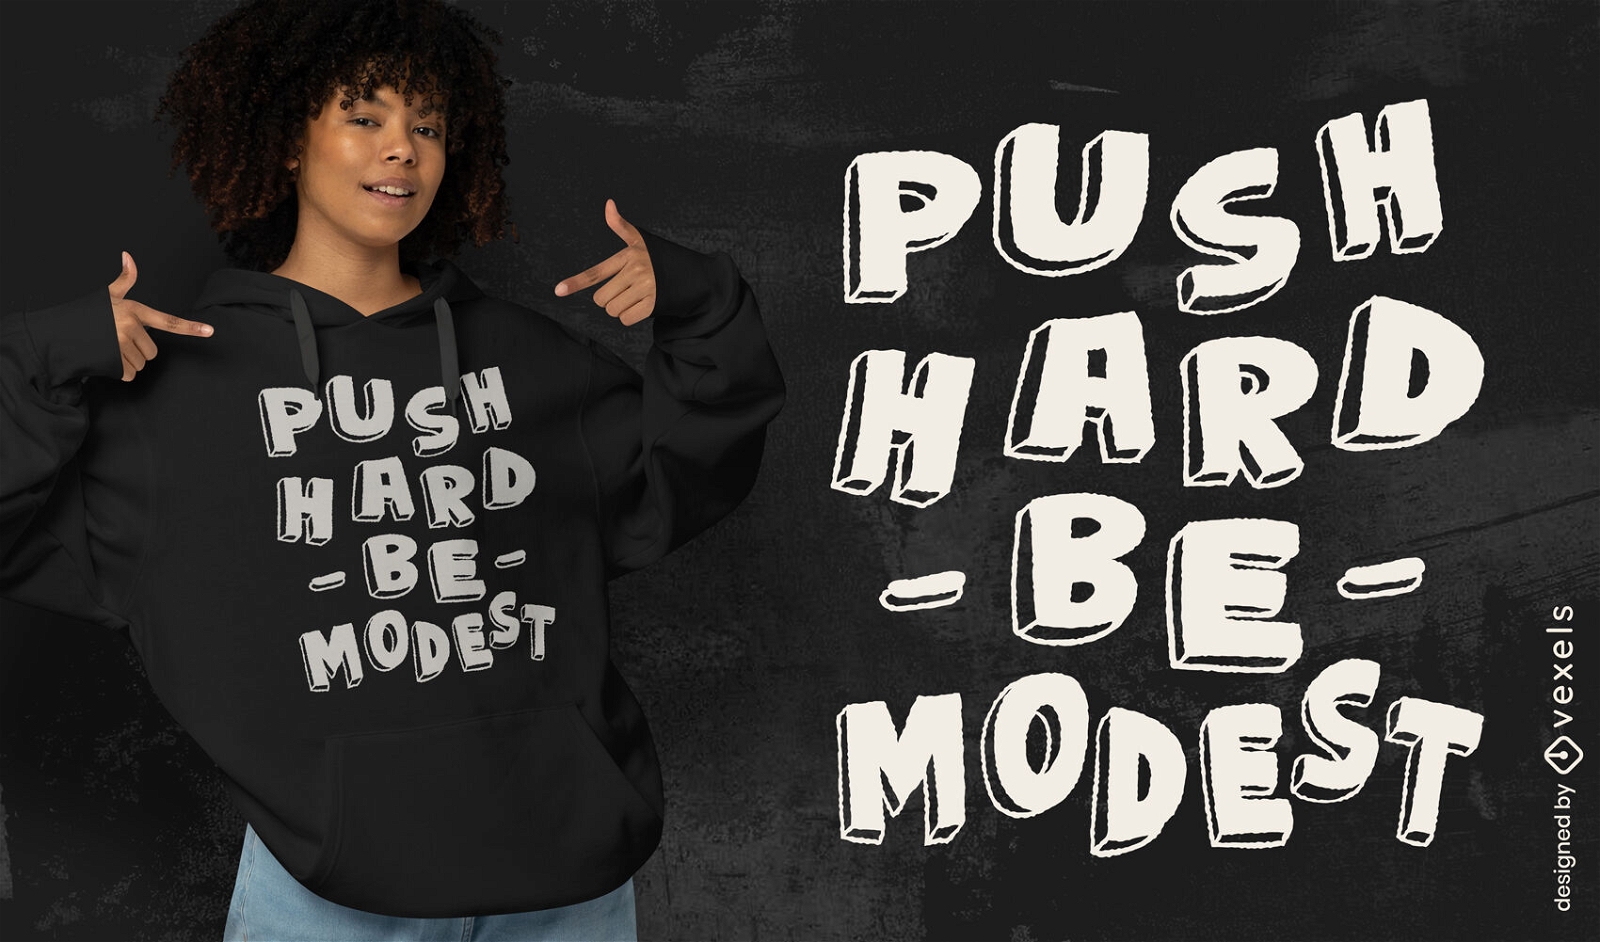 Push hard be honest t-shirt design